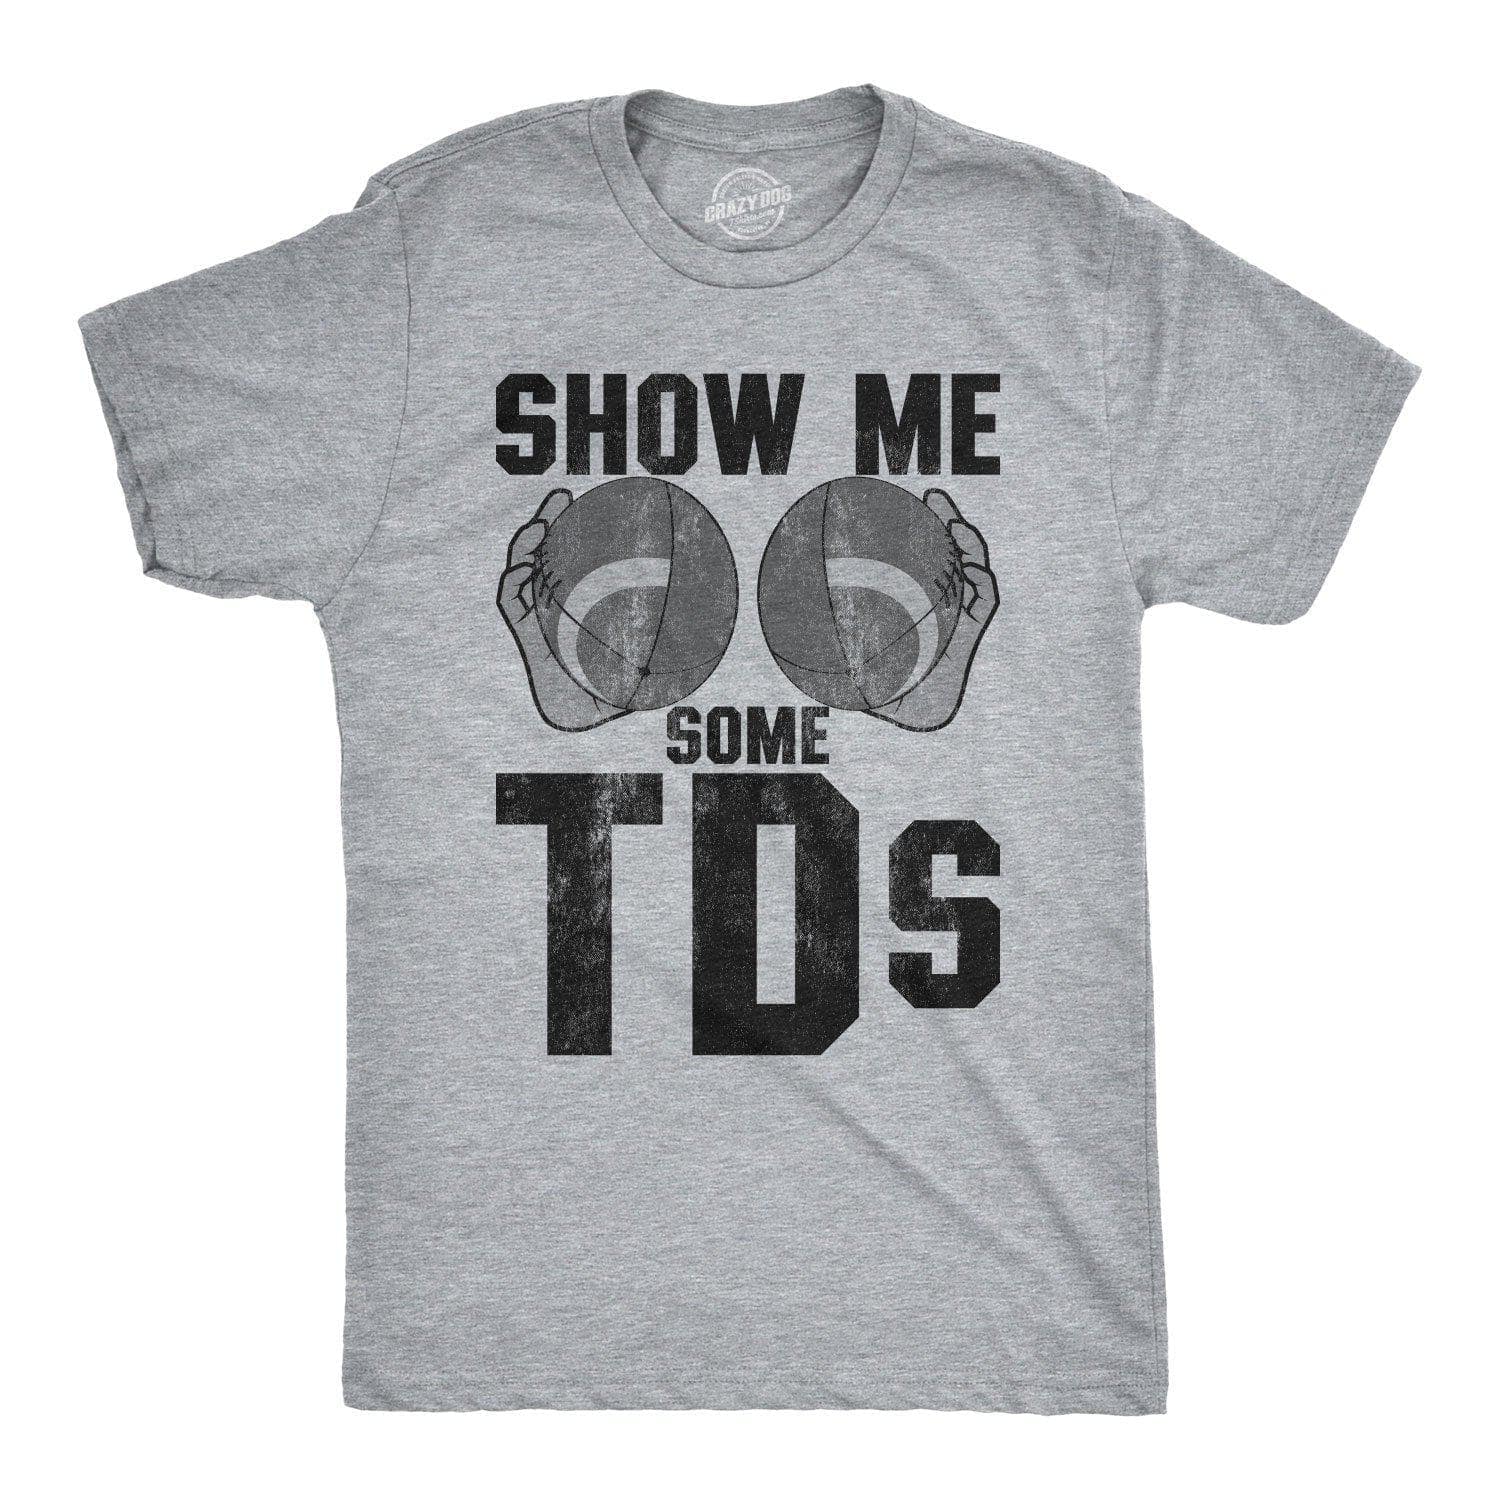 Show Me Some TDs Men's Tshirt - Crazy Dog T-Shirts